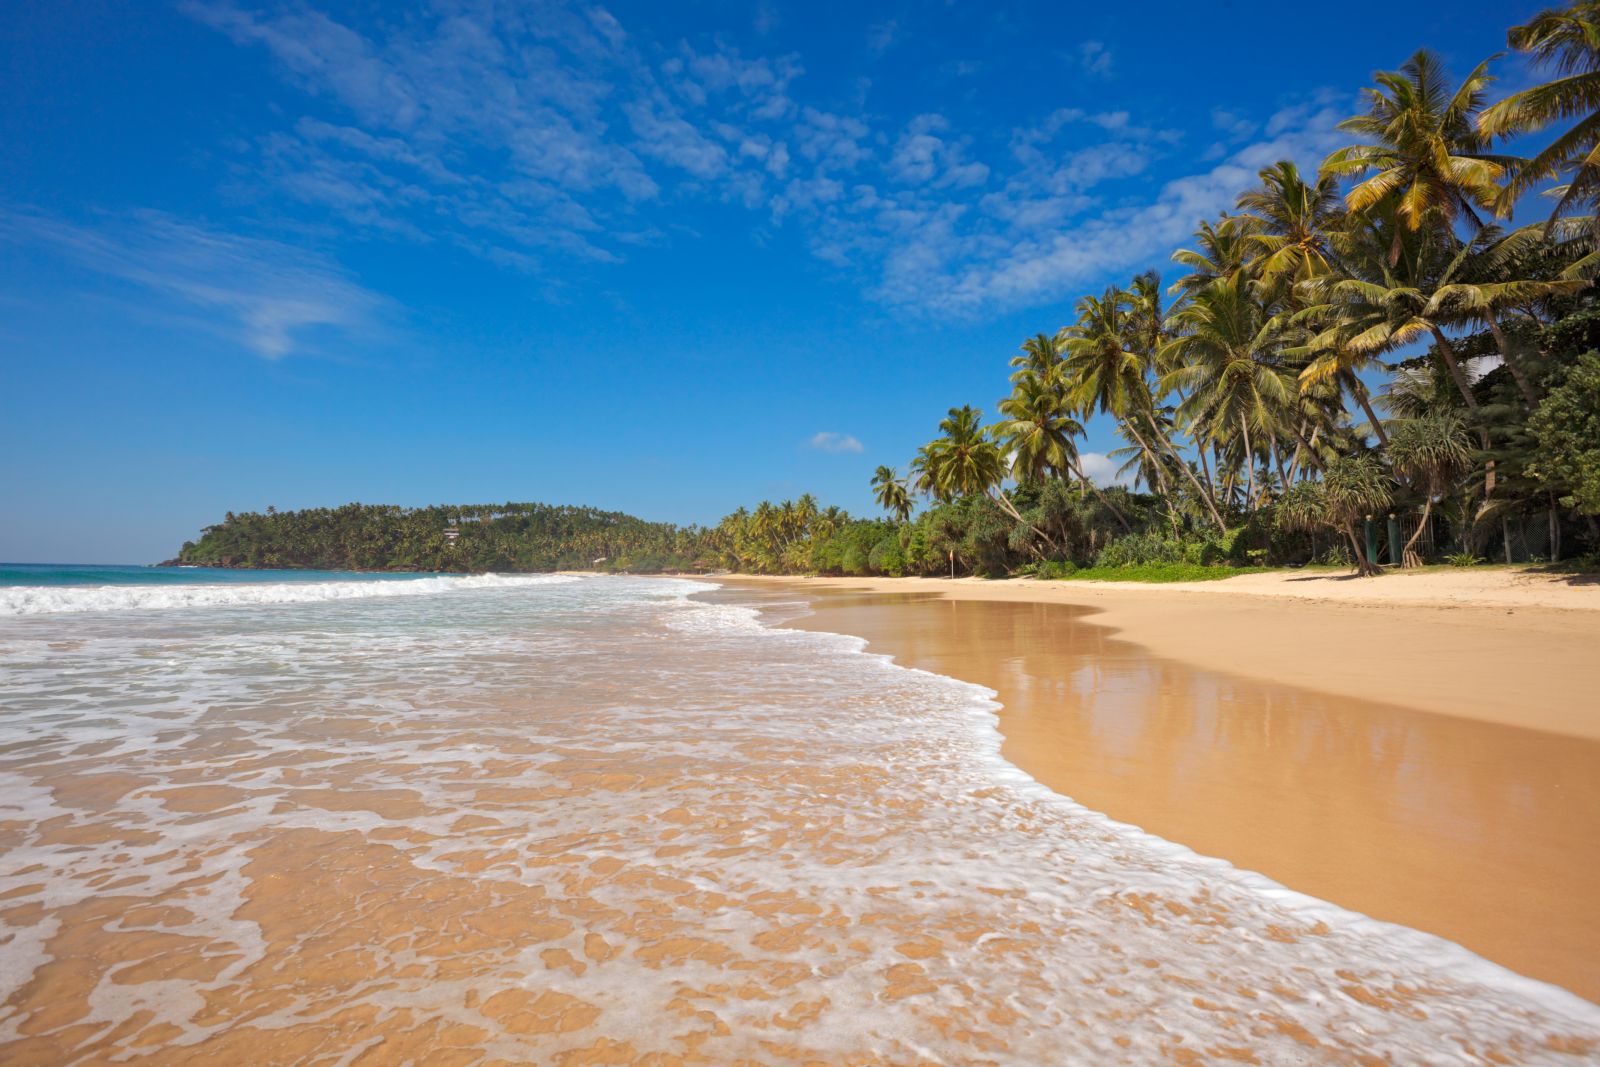 Golden sand beach backed by palm trees on the south coast of Sri Lanka